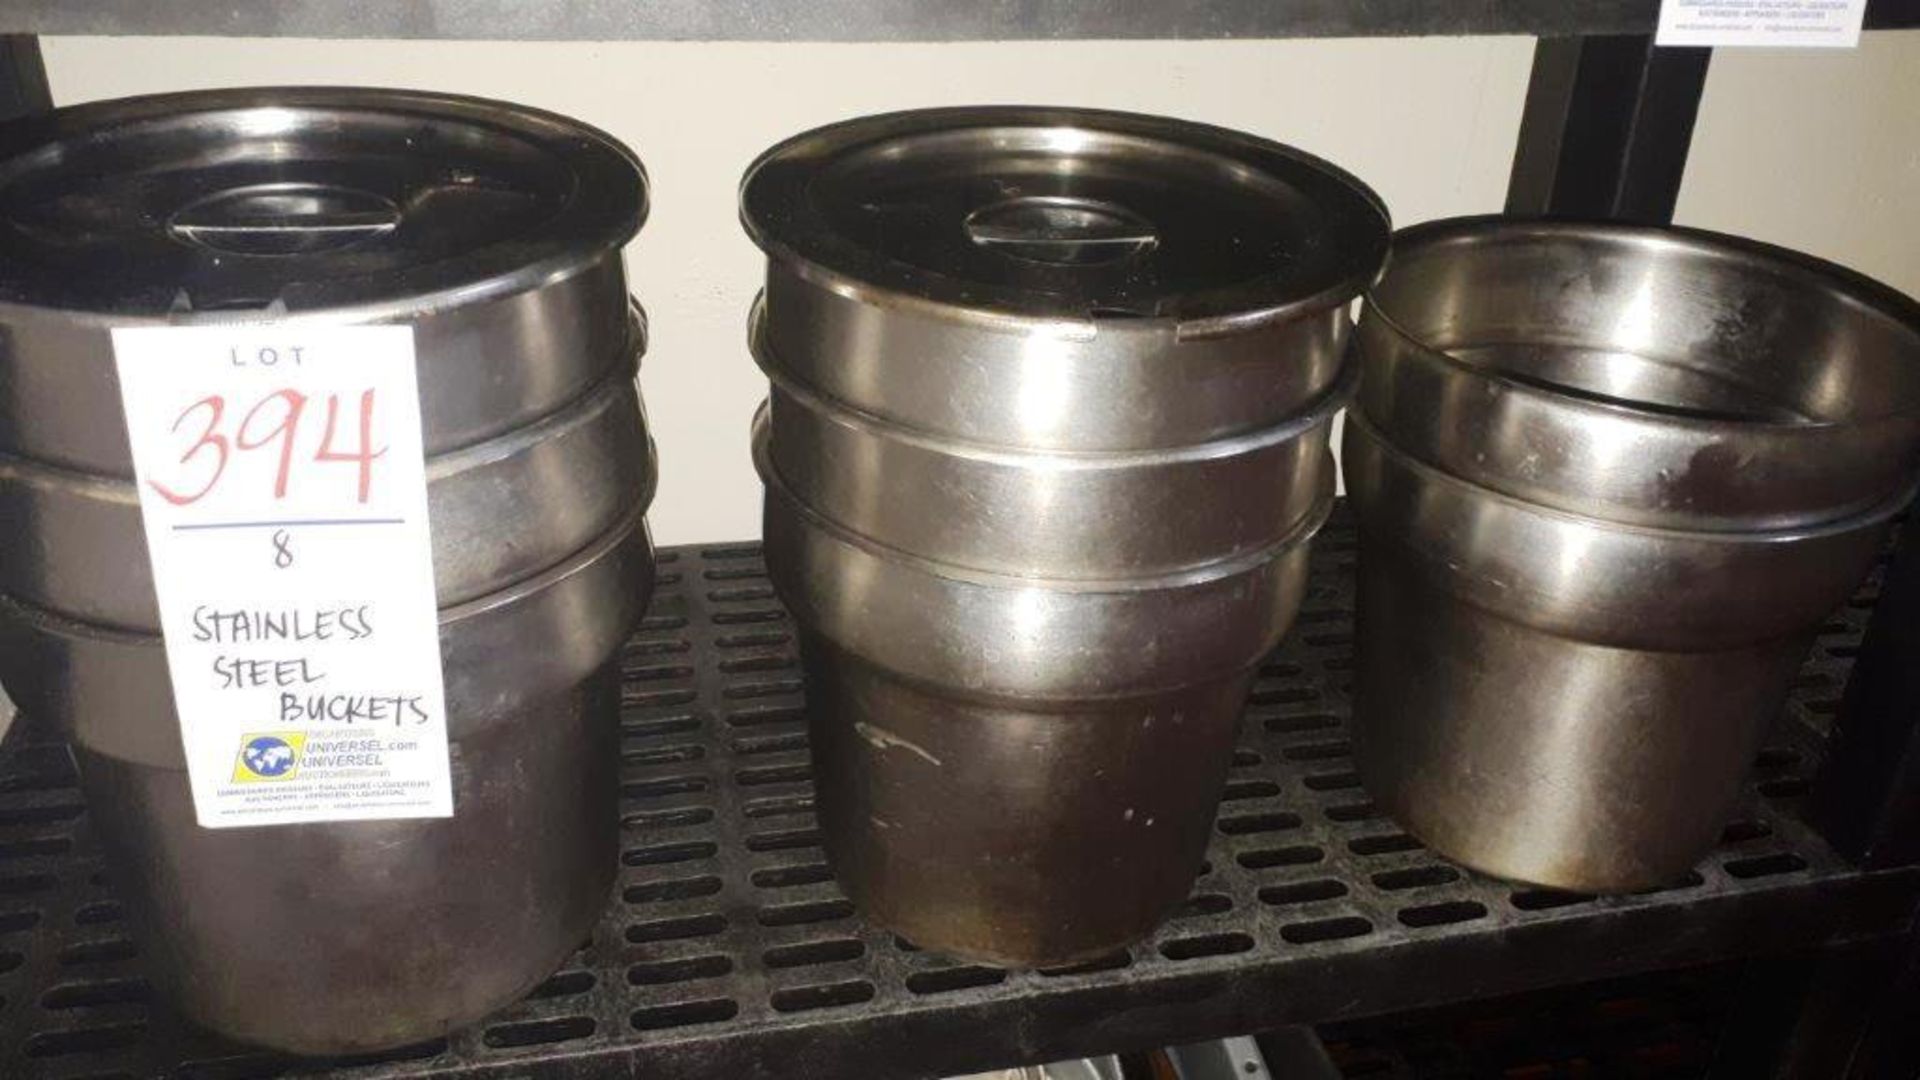 Stainless steel buckets